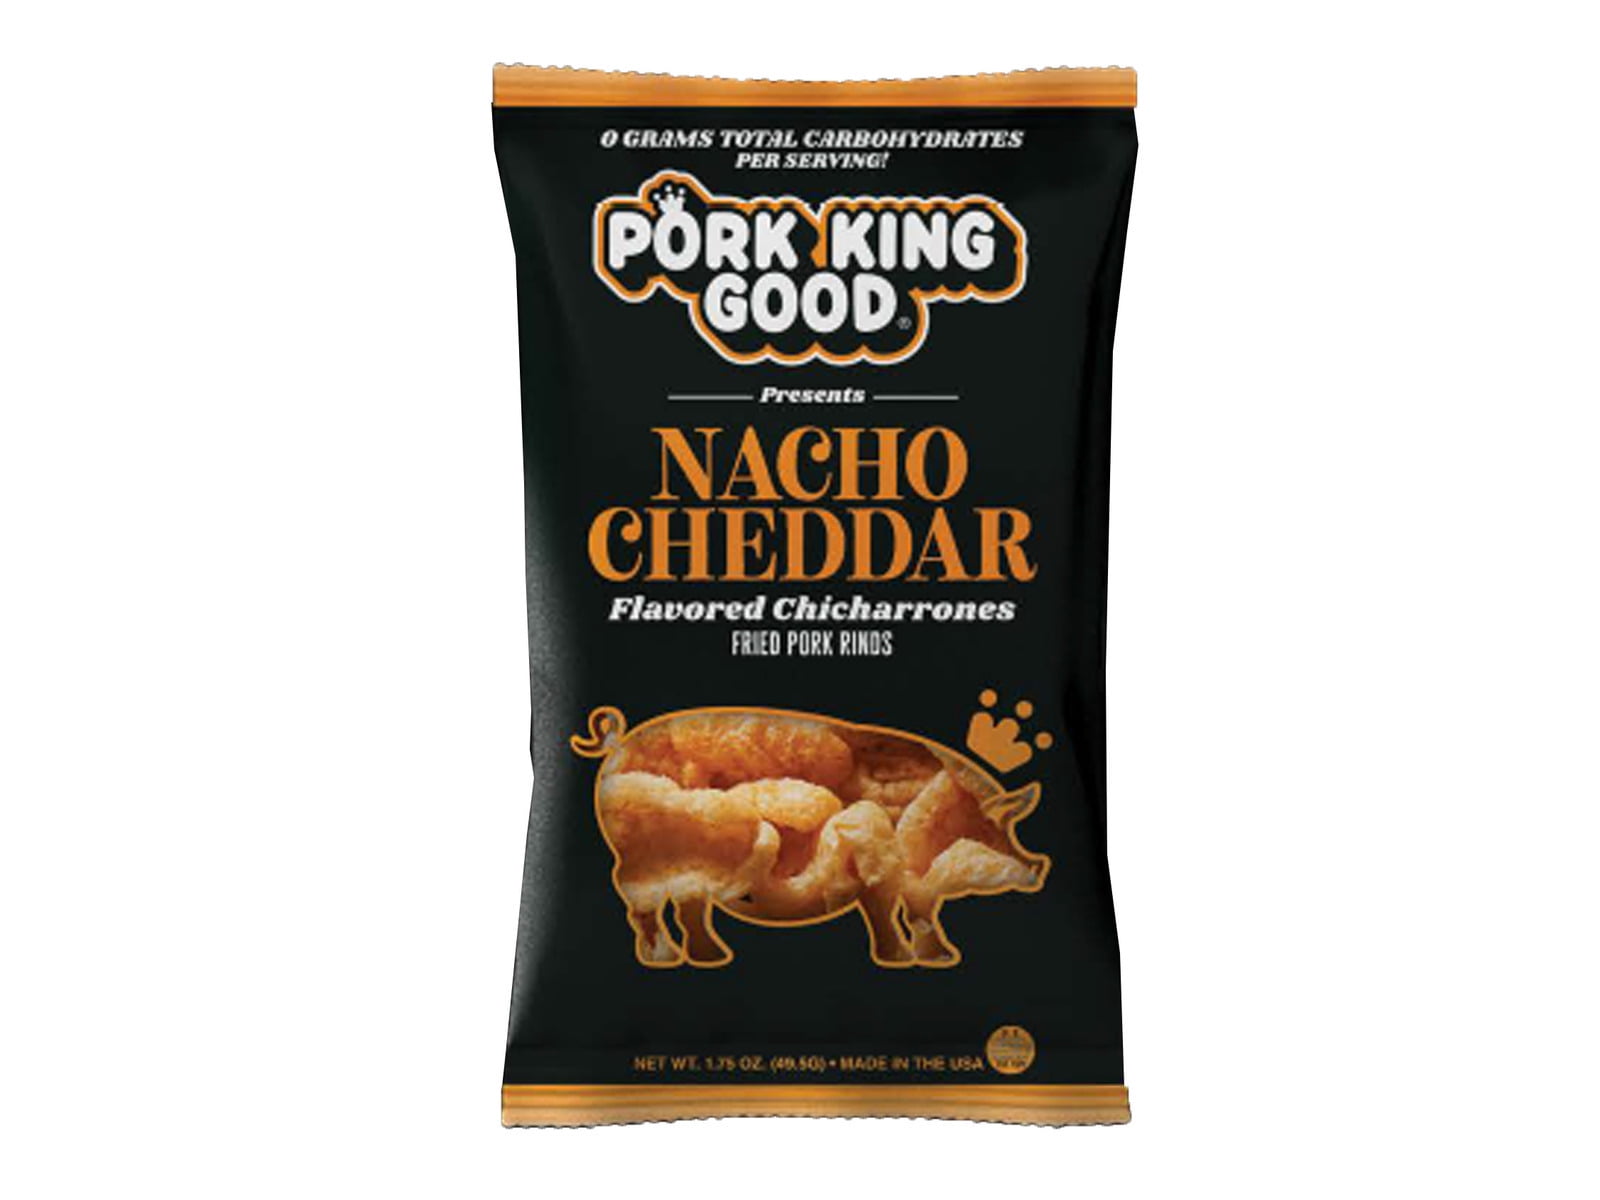 Pork King Good Nacho Cheddar Pork Rinds 4 Pack